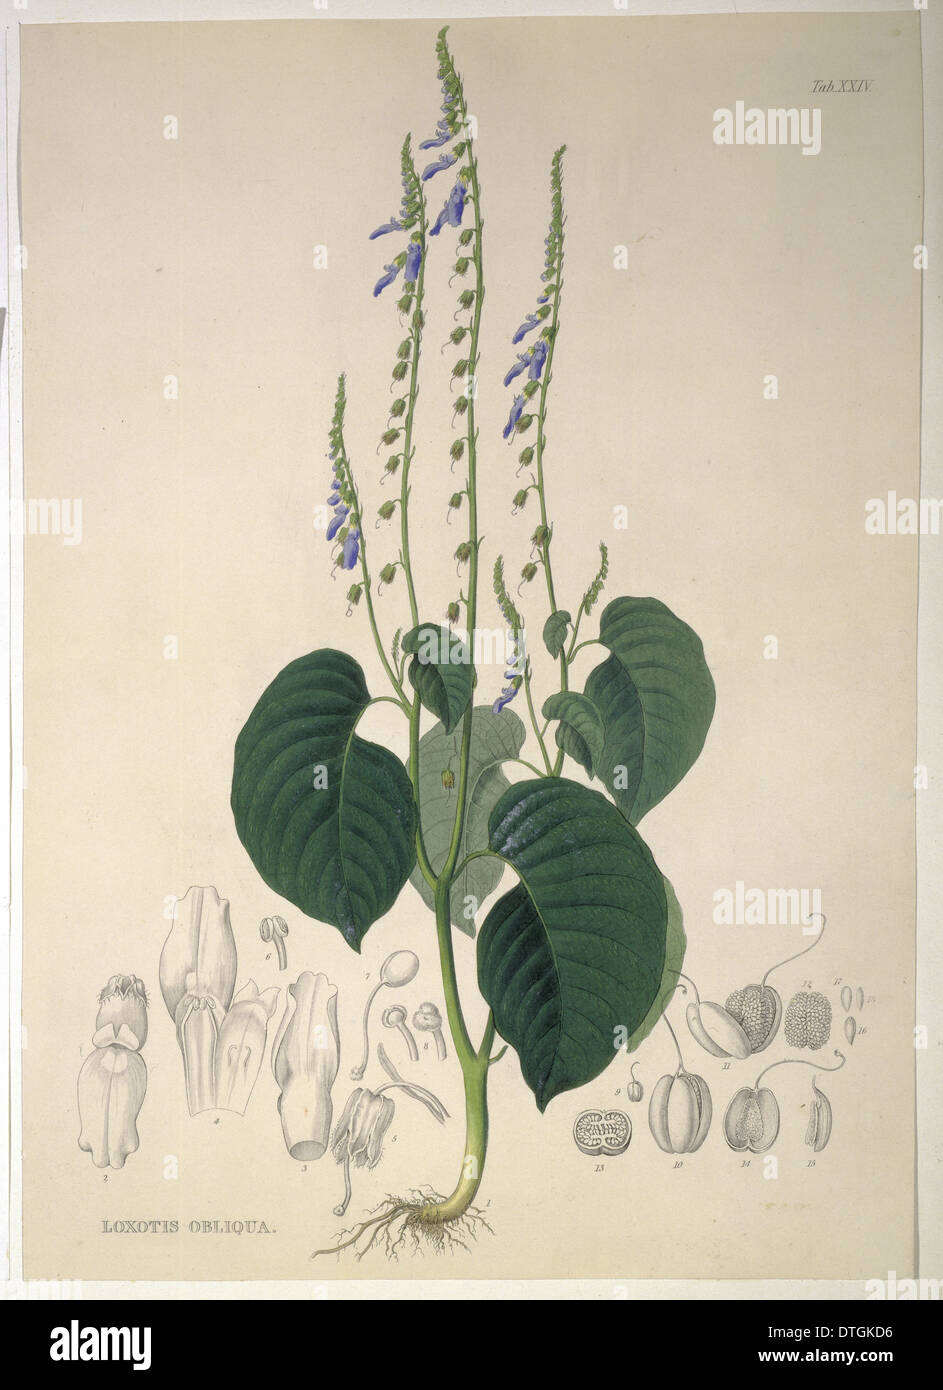 Rhynchoglossum obliquum Stock Photo